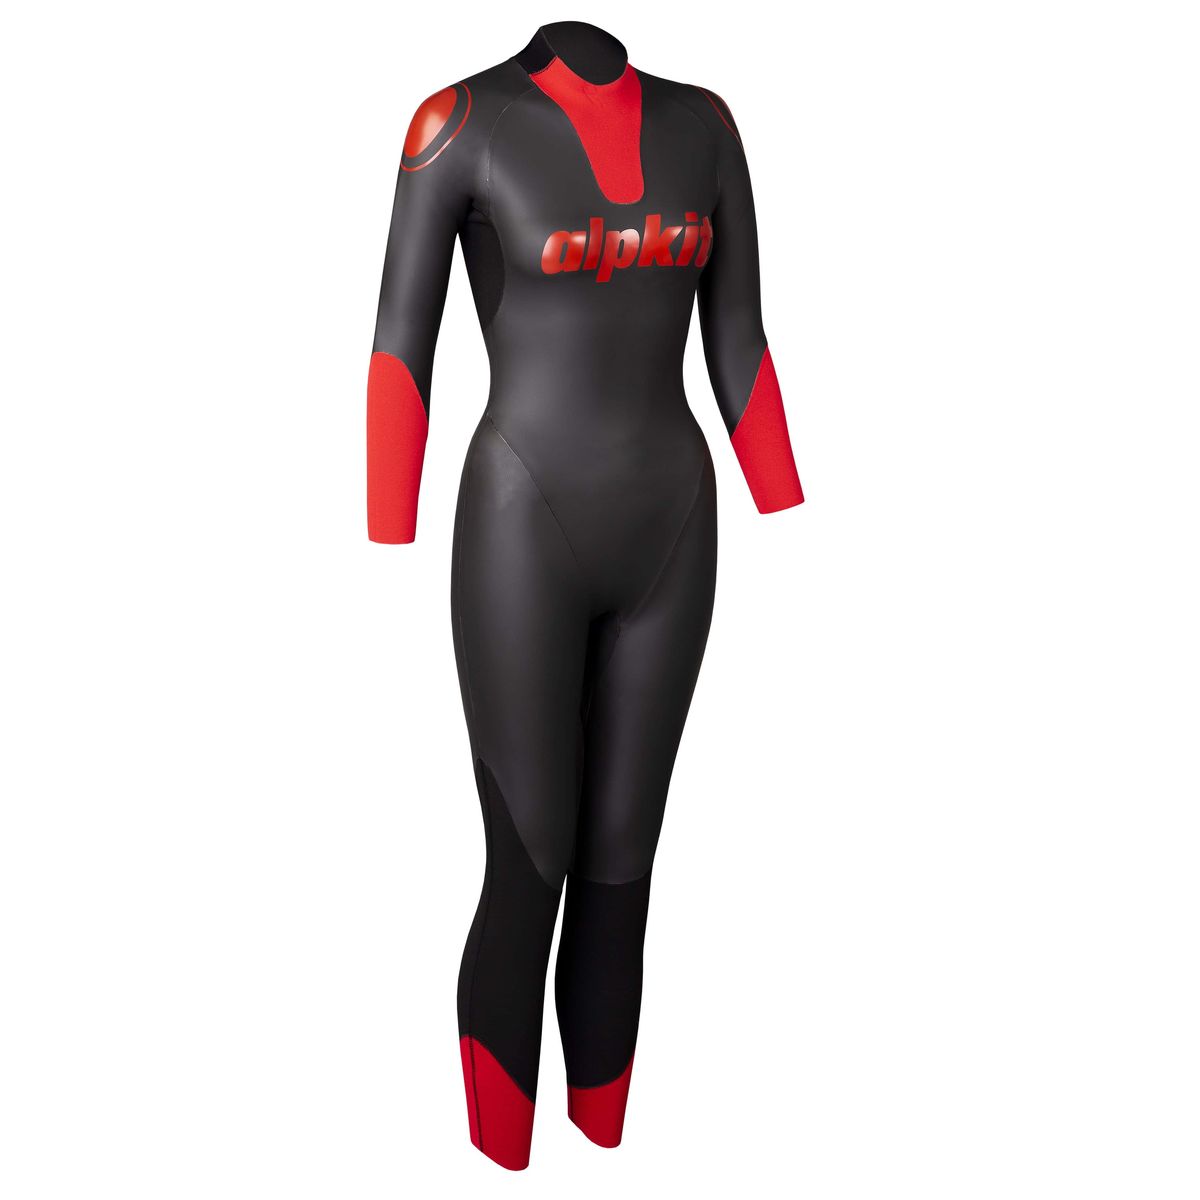 Lotic Swimming Wetsuit (Women's)